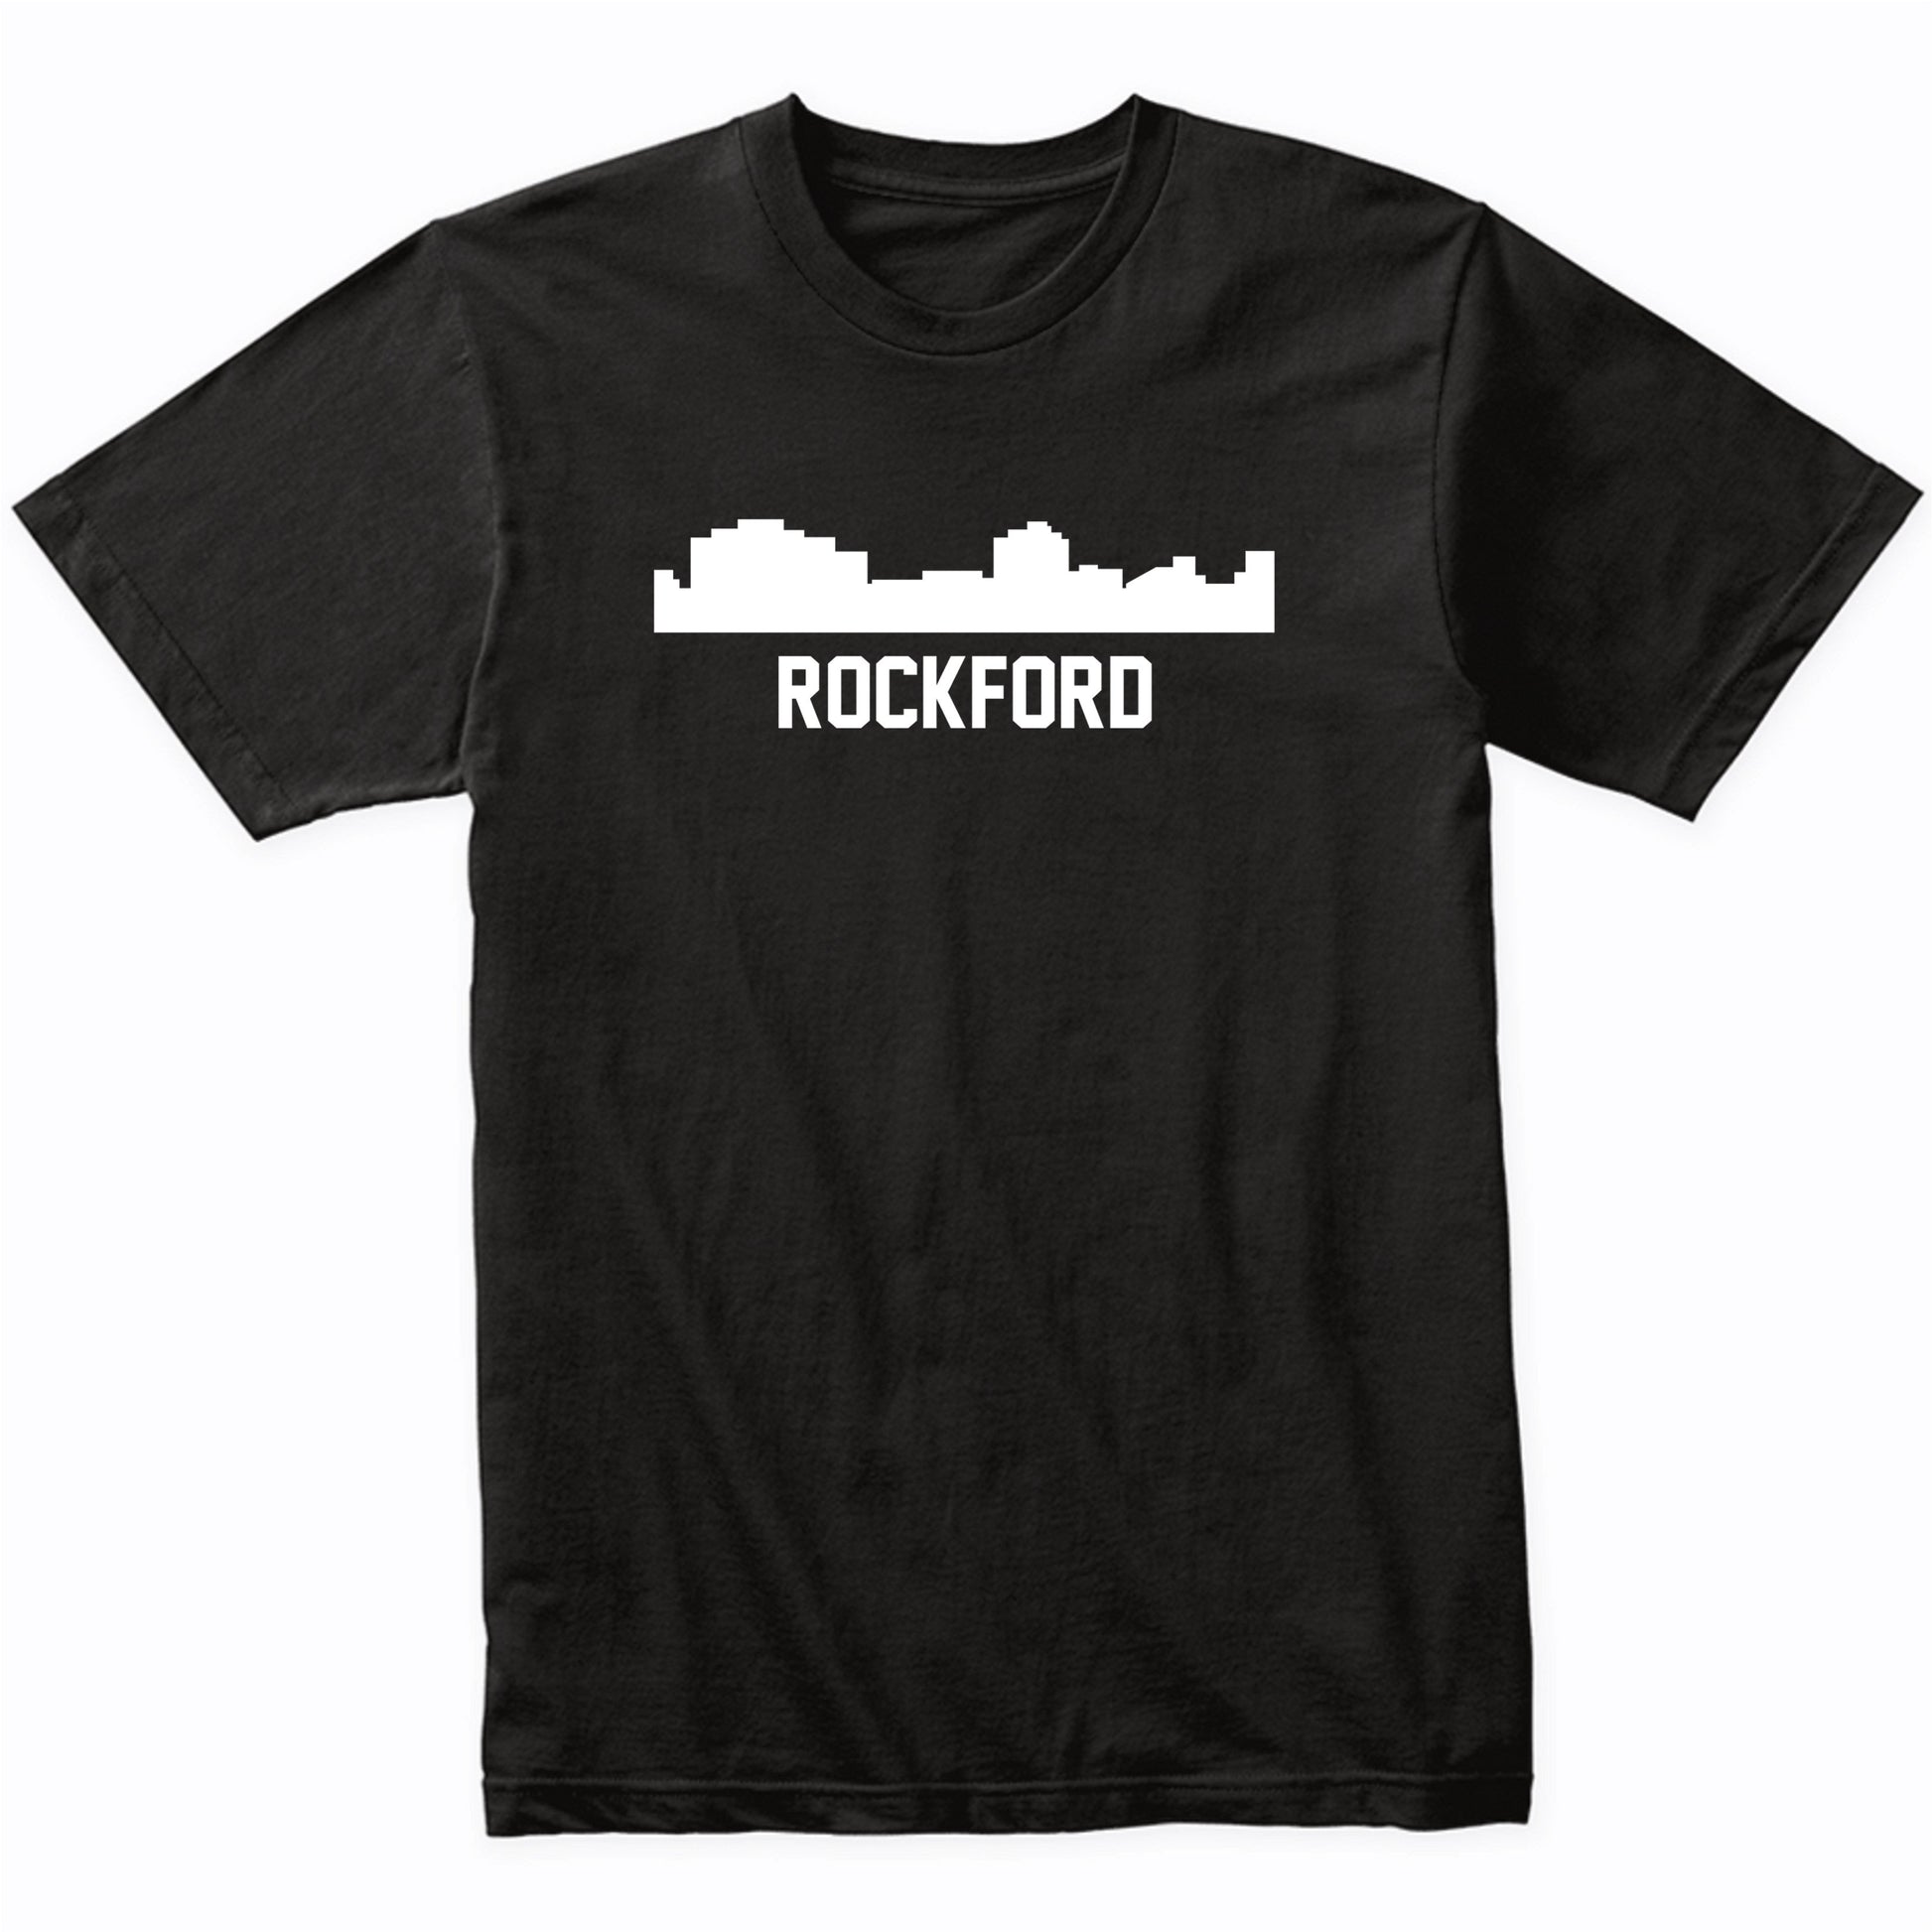 Rockford Illinois Skyline Cityscape T-Shirt